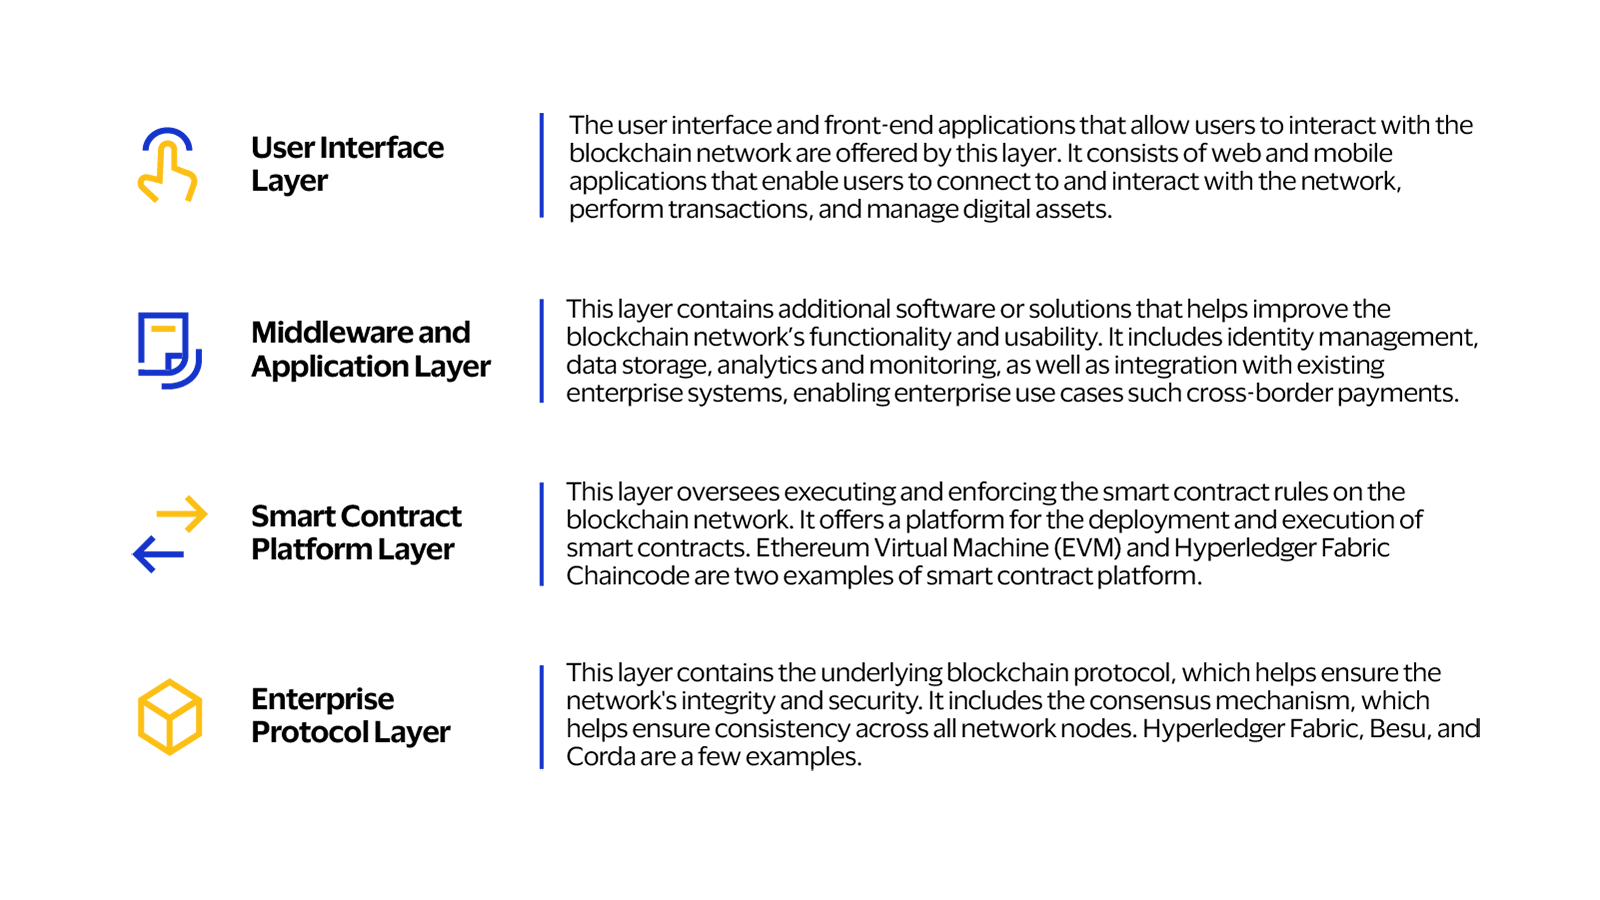 Layered approach to building an enterprise blockchain platform. See image description for details.